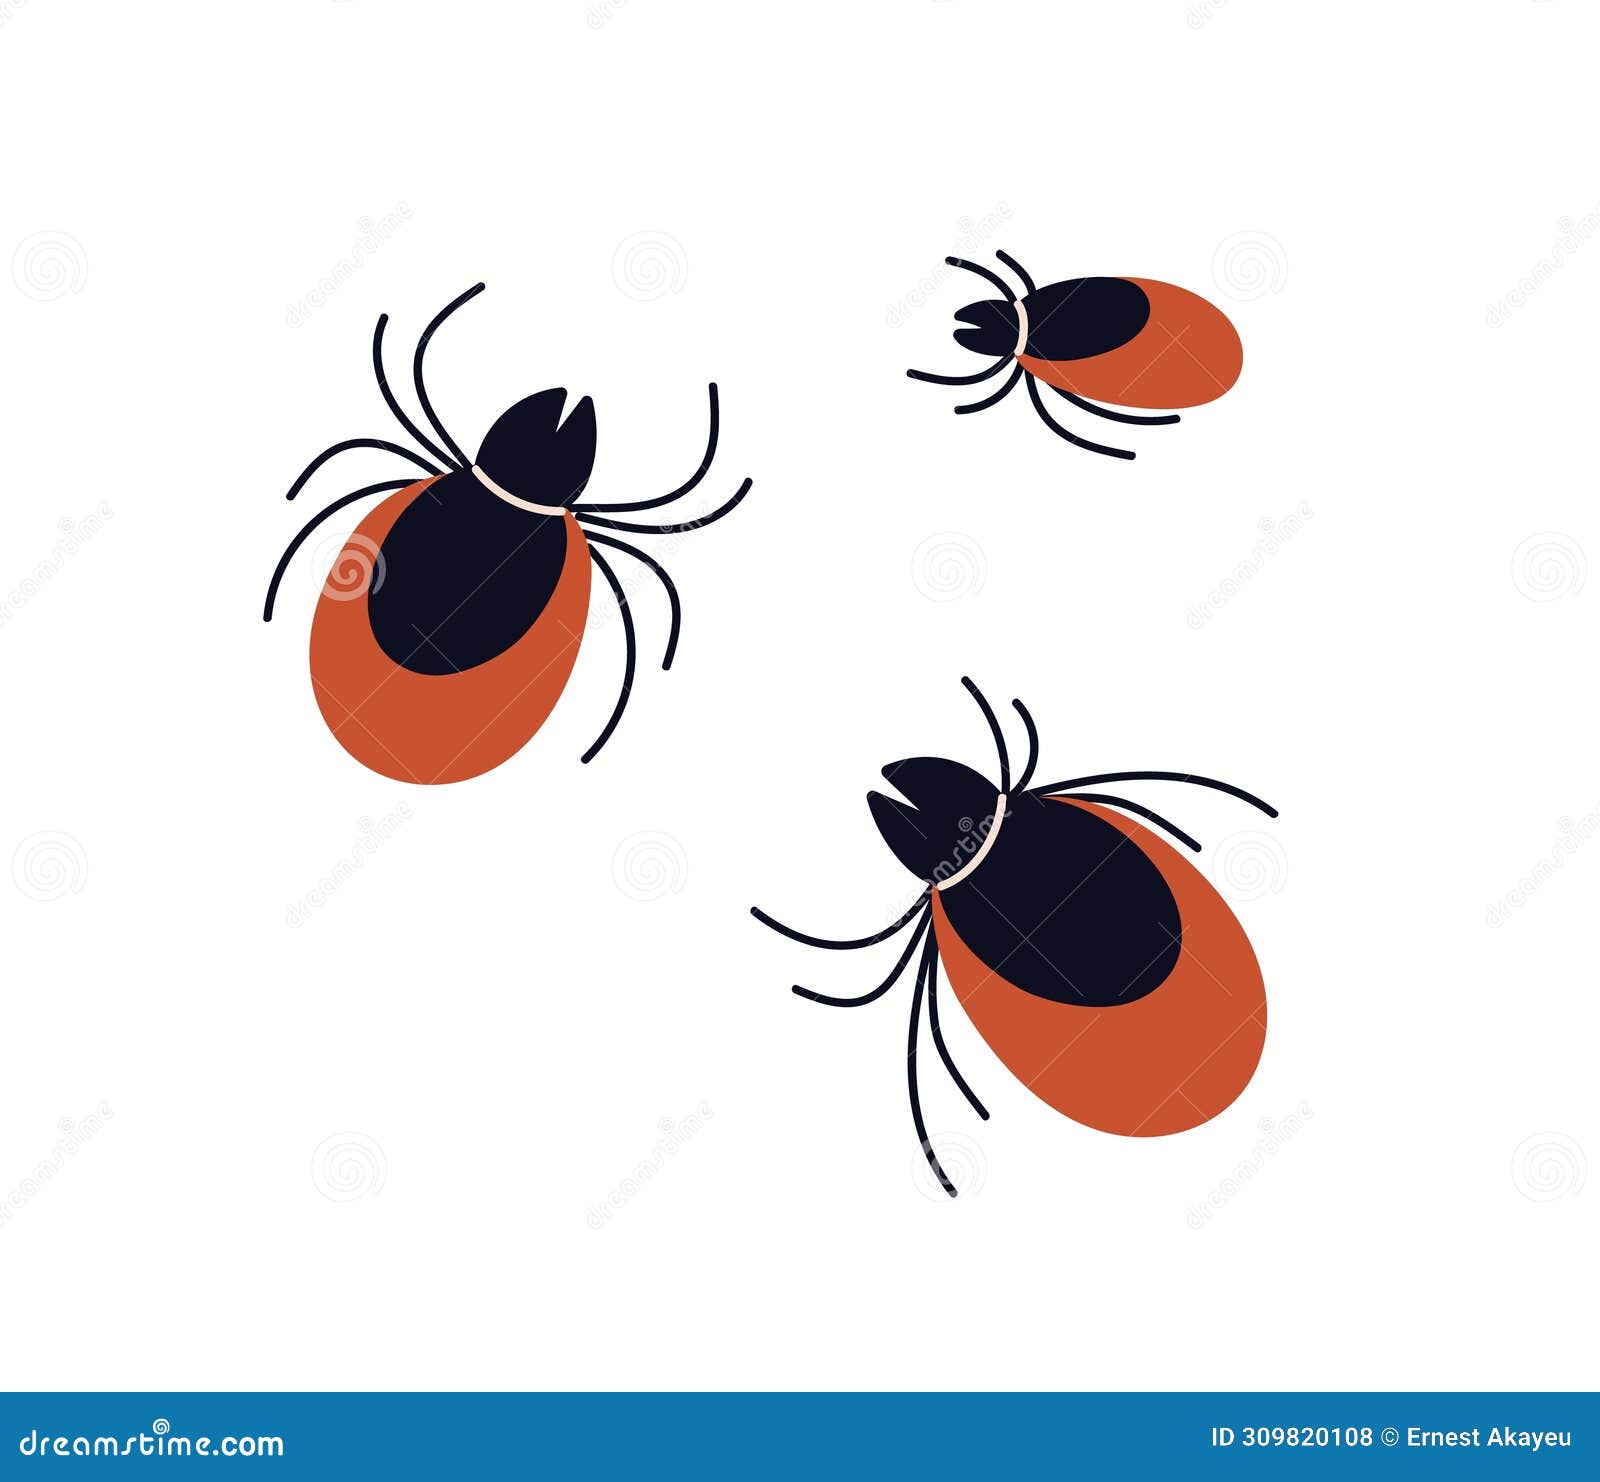 mites, parasite predatory insects. ticks, encephalitis bugs. acarus animals. acarids, epidemic dangerous little beetles